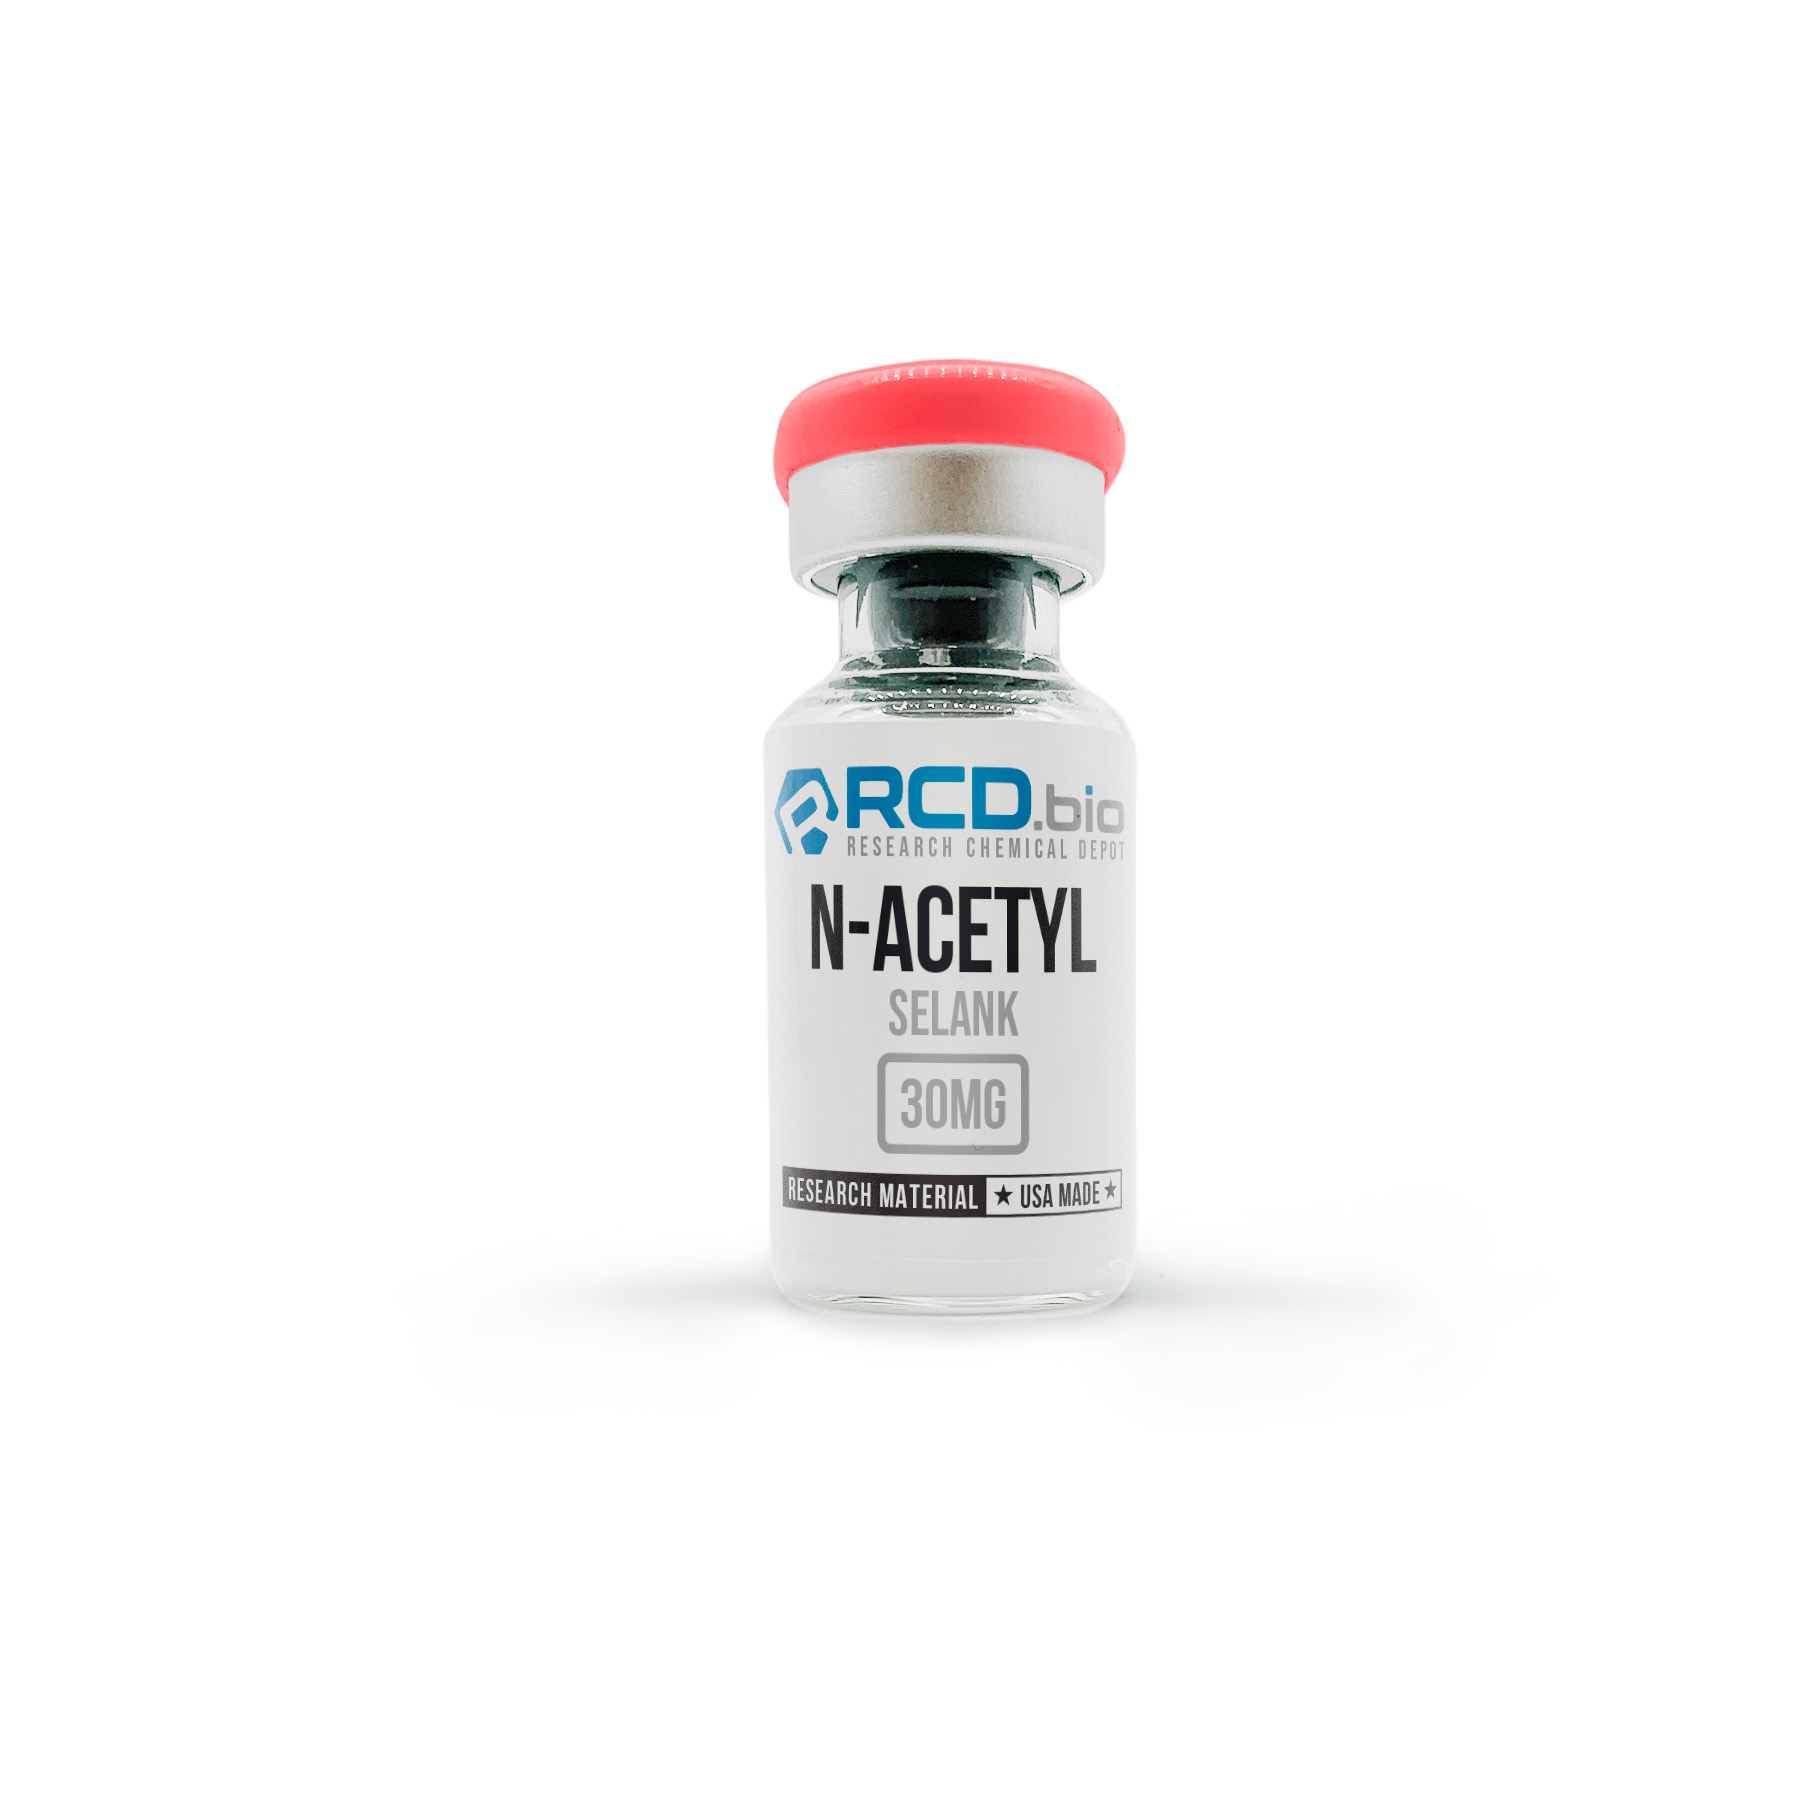 N-Acetyl Selank Peptide For Sale | Fast Shipping | RCD.bio